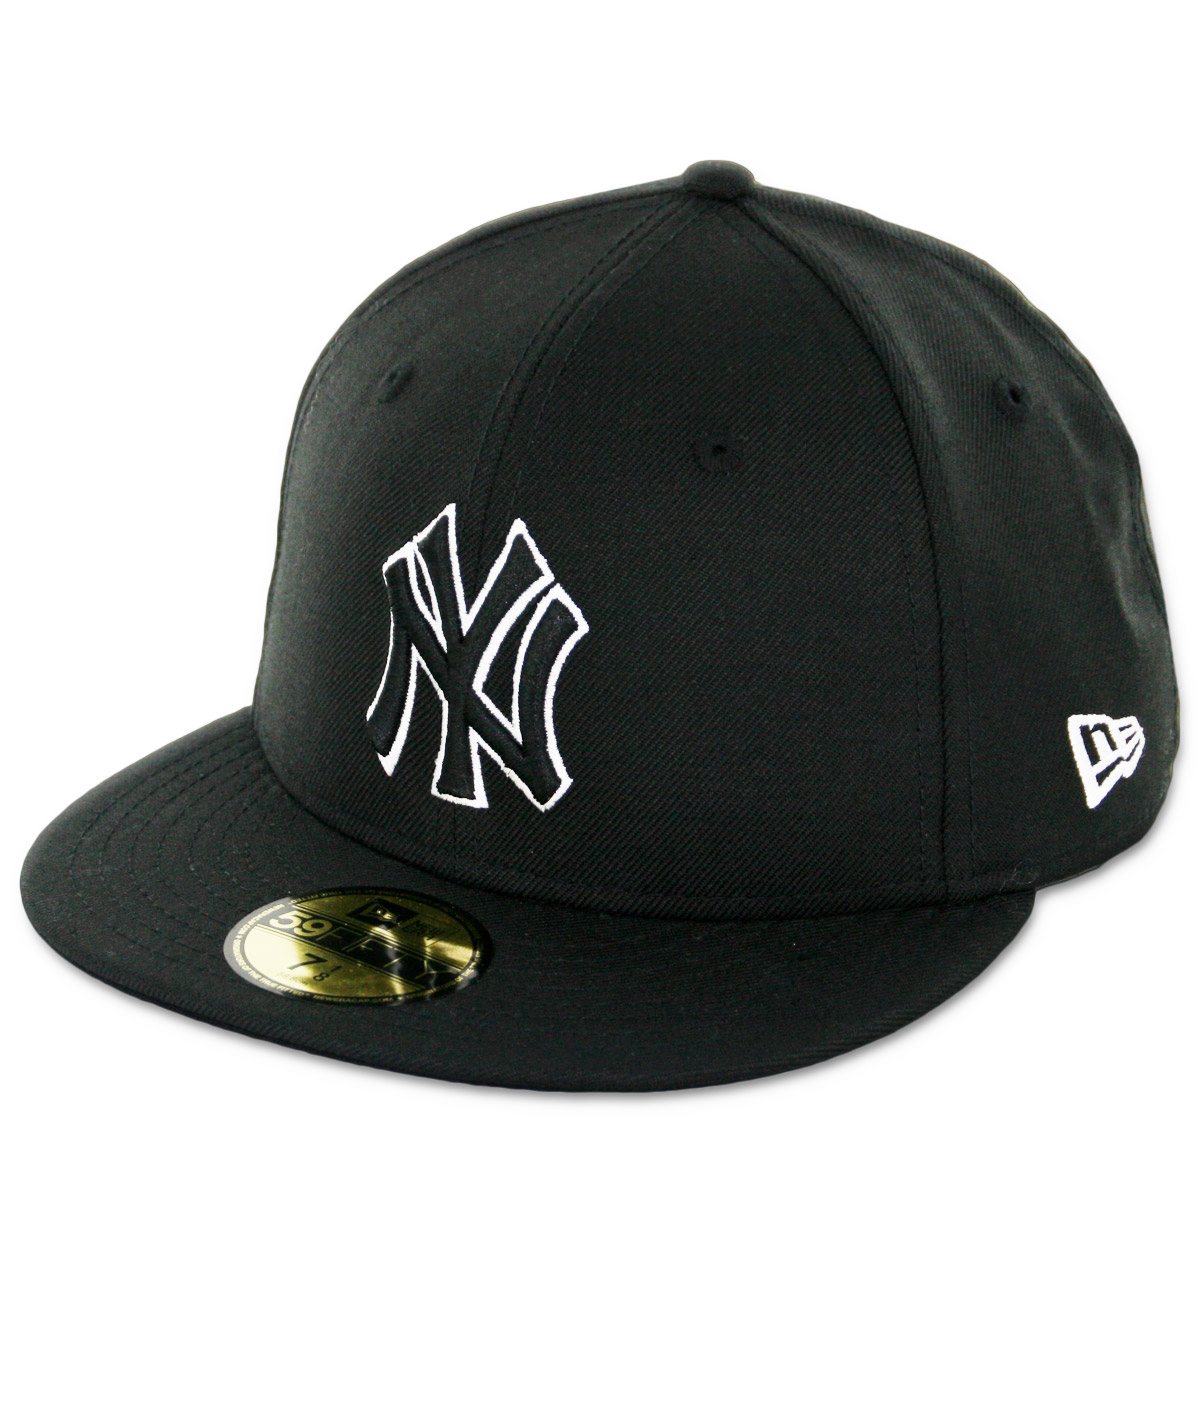 New Era 59Fifty York Fitted Black Black White Hat - Billion Creation